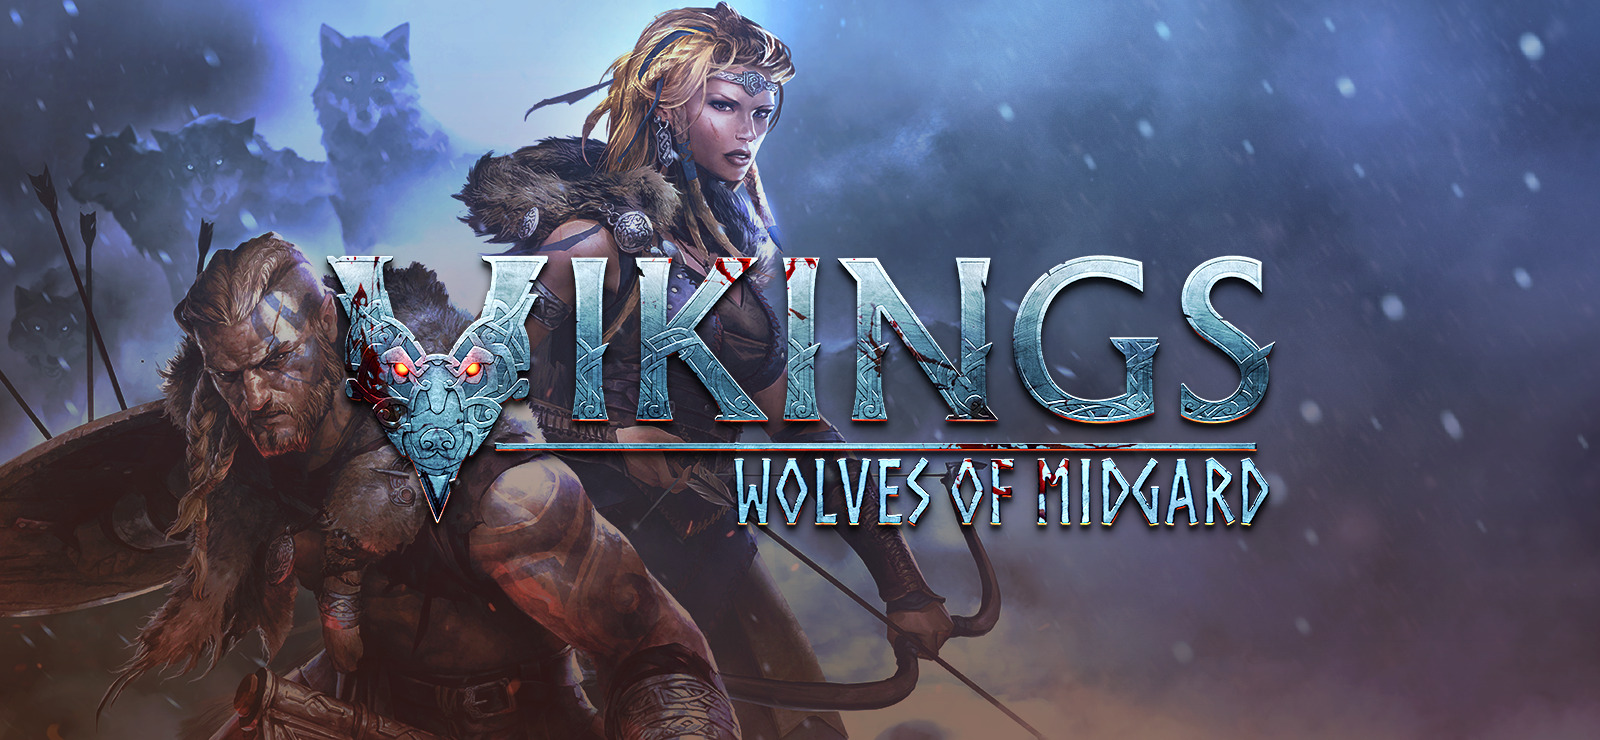 Vikings - Wolves of Midgard on